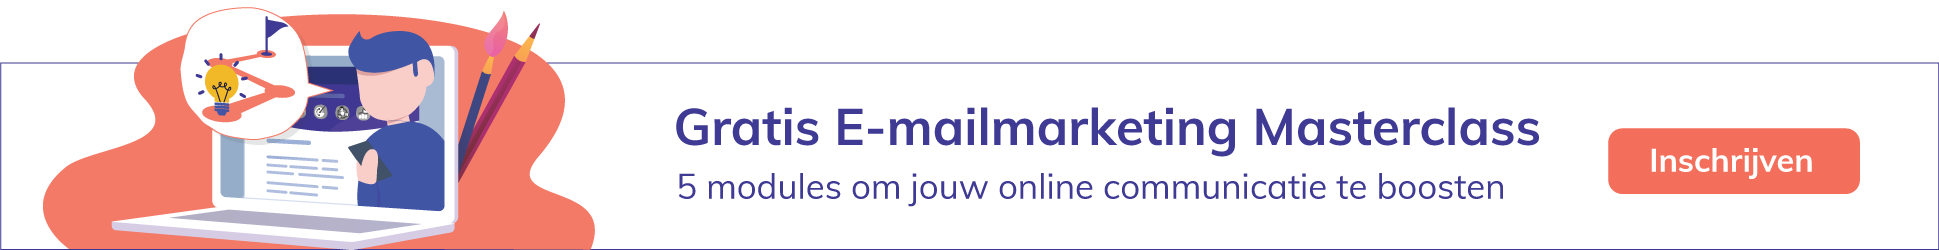 Gratis E-mailmarketing Masterclass